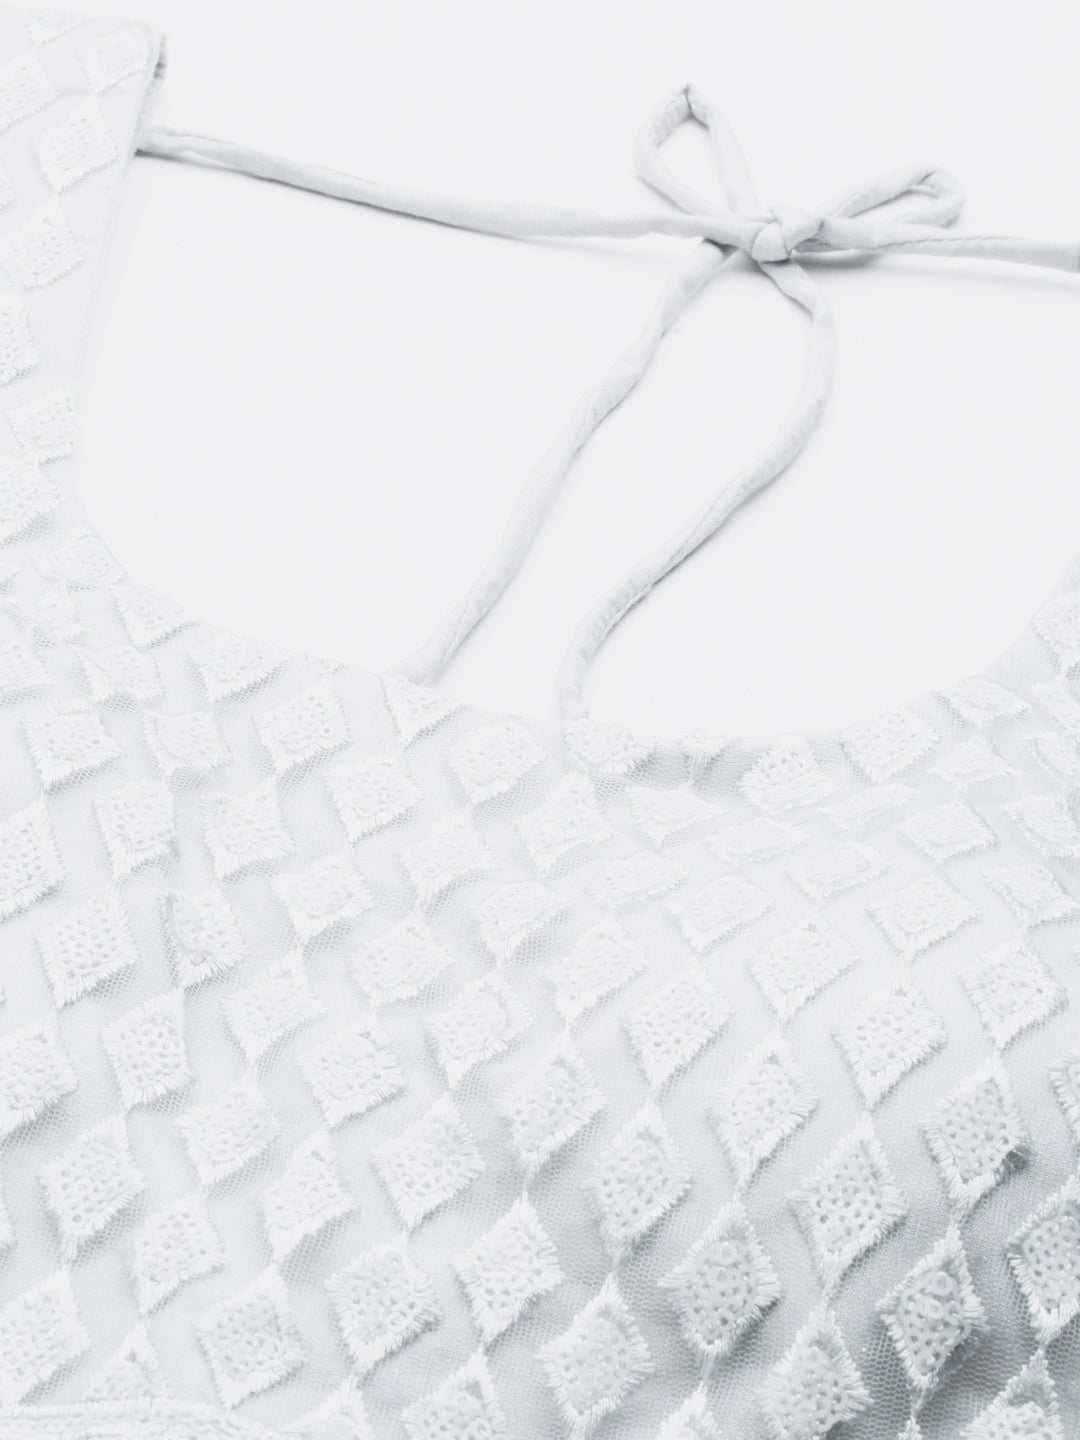 Women's Grey Net Sequinse Work Fully-Stitched Lehenga & Stitched Blouse, Dupatta - Royal Dwells